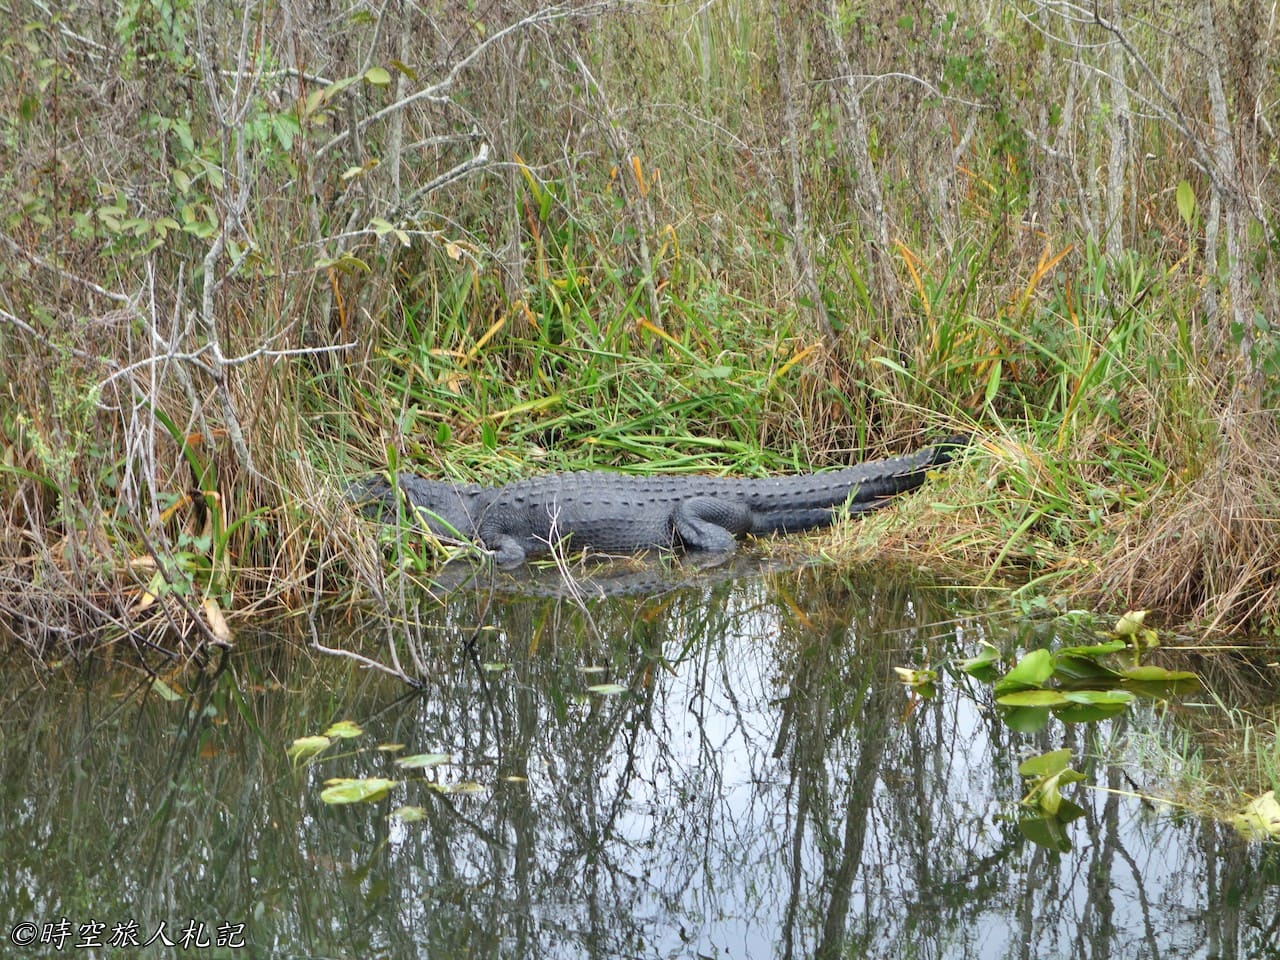 Everglades National Park, Shark Valley, Gulf coast, Everglades national park, marsh ecology 3